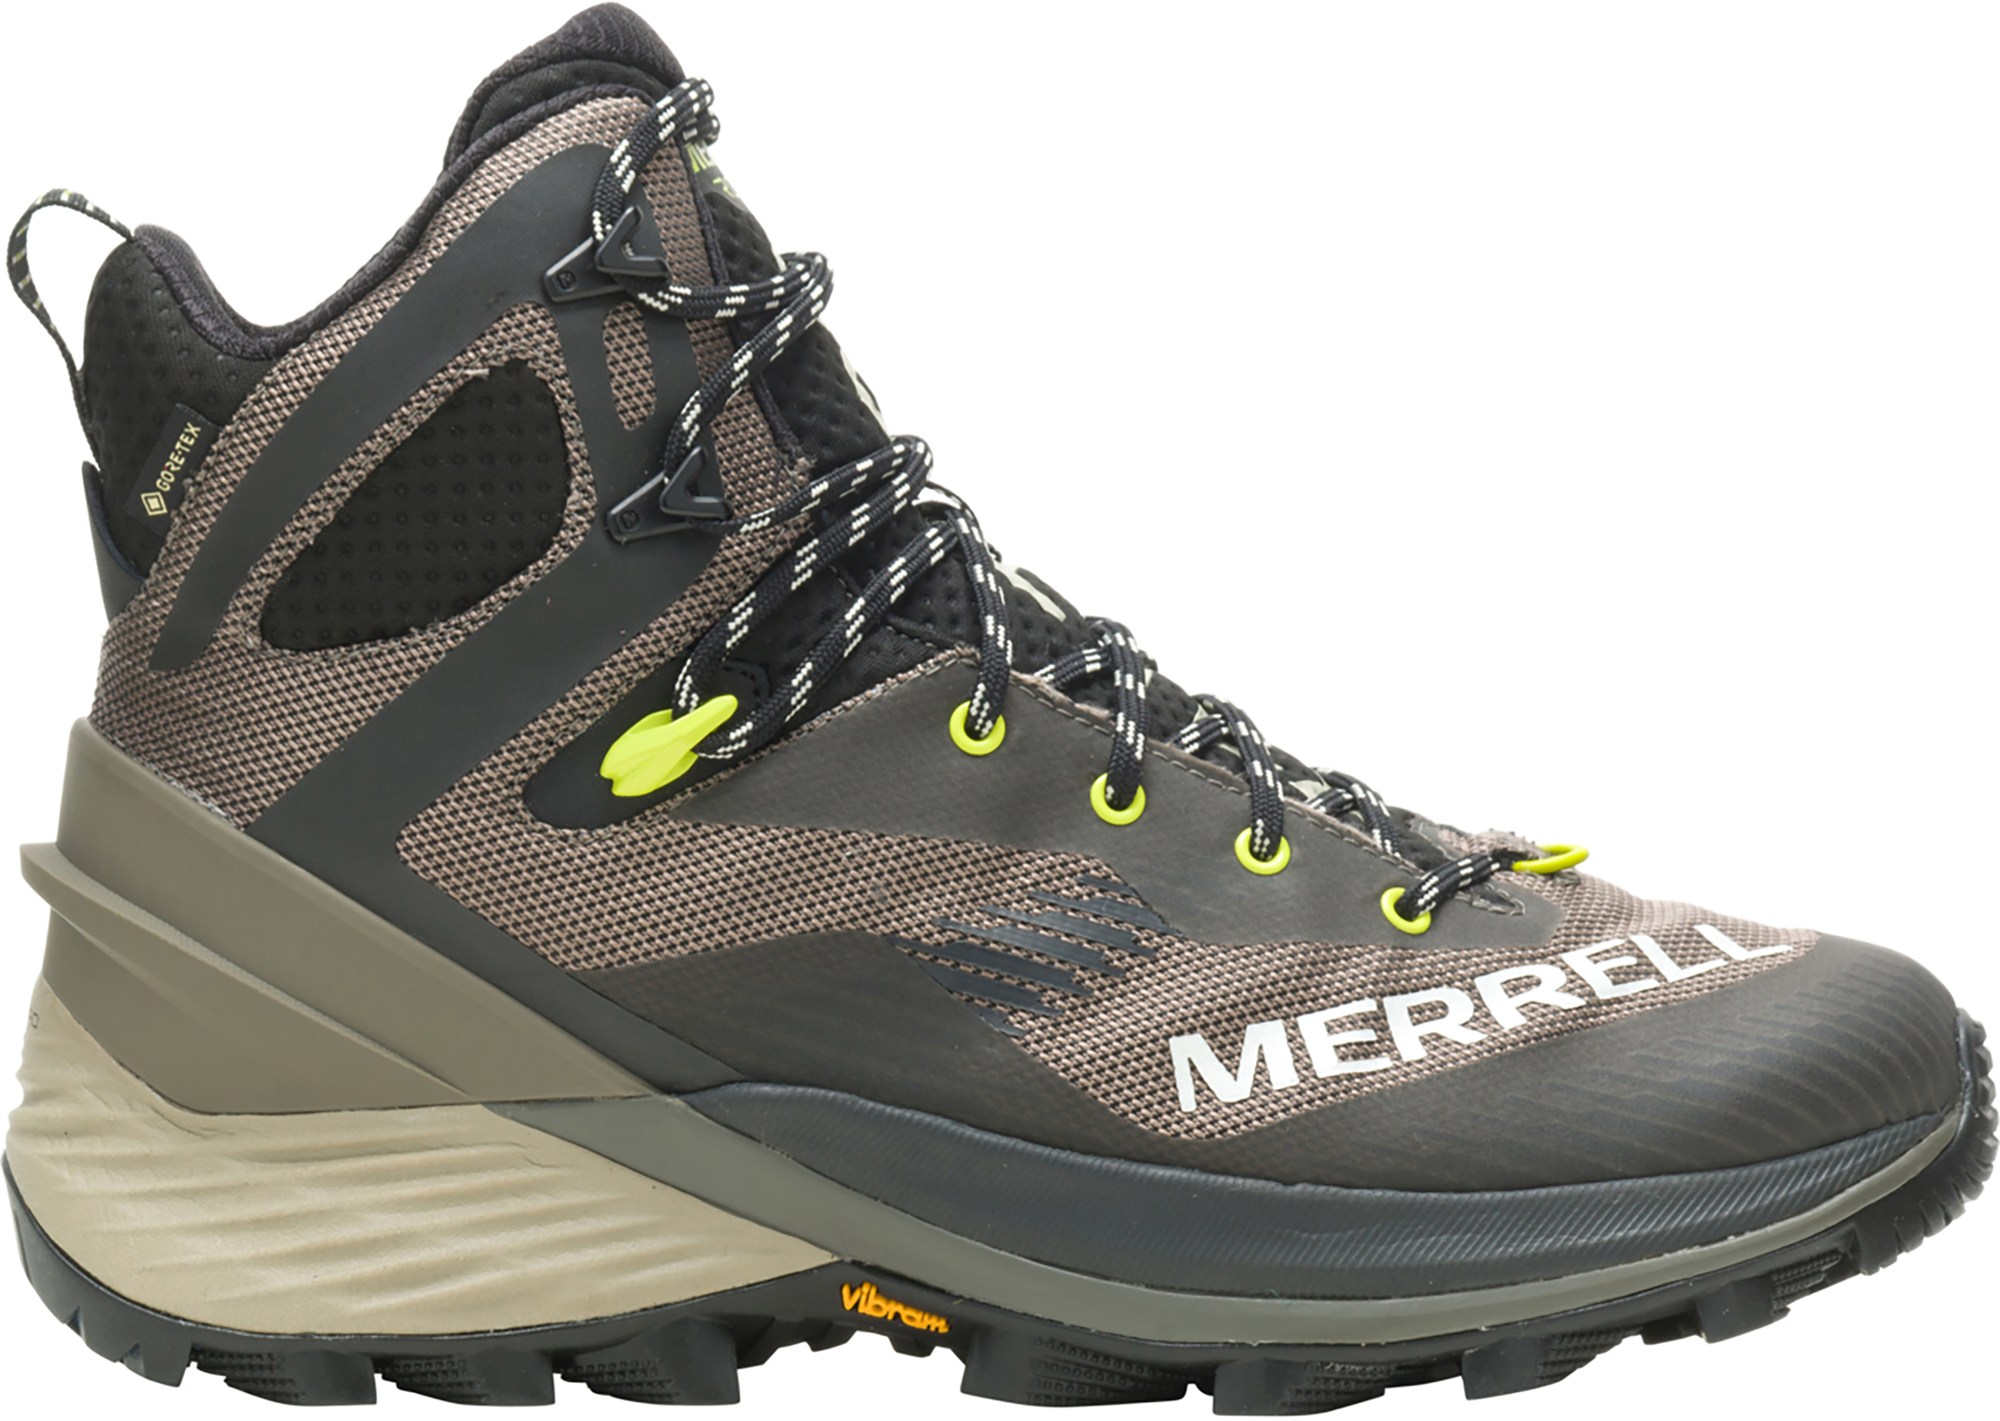 Походные ботинки Rogue Hiker Mid GORE-TEX — мужские Merrell, хаки